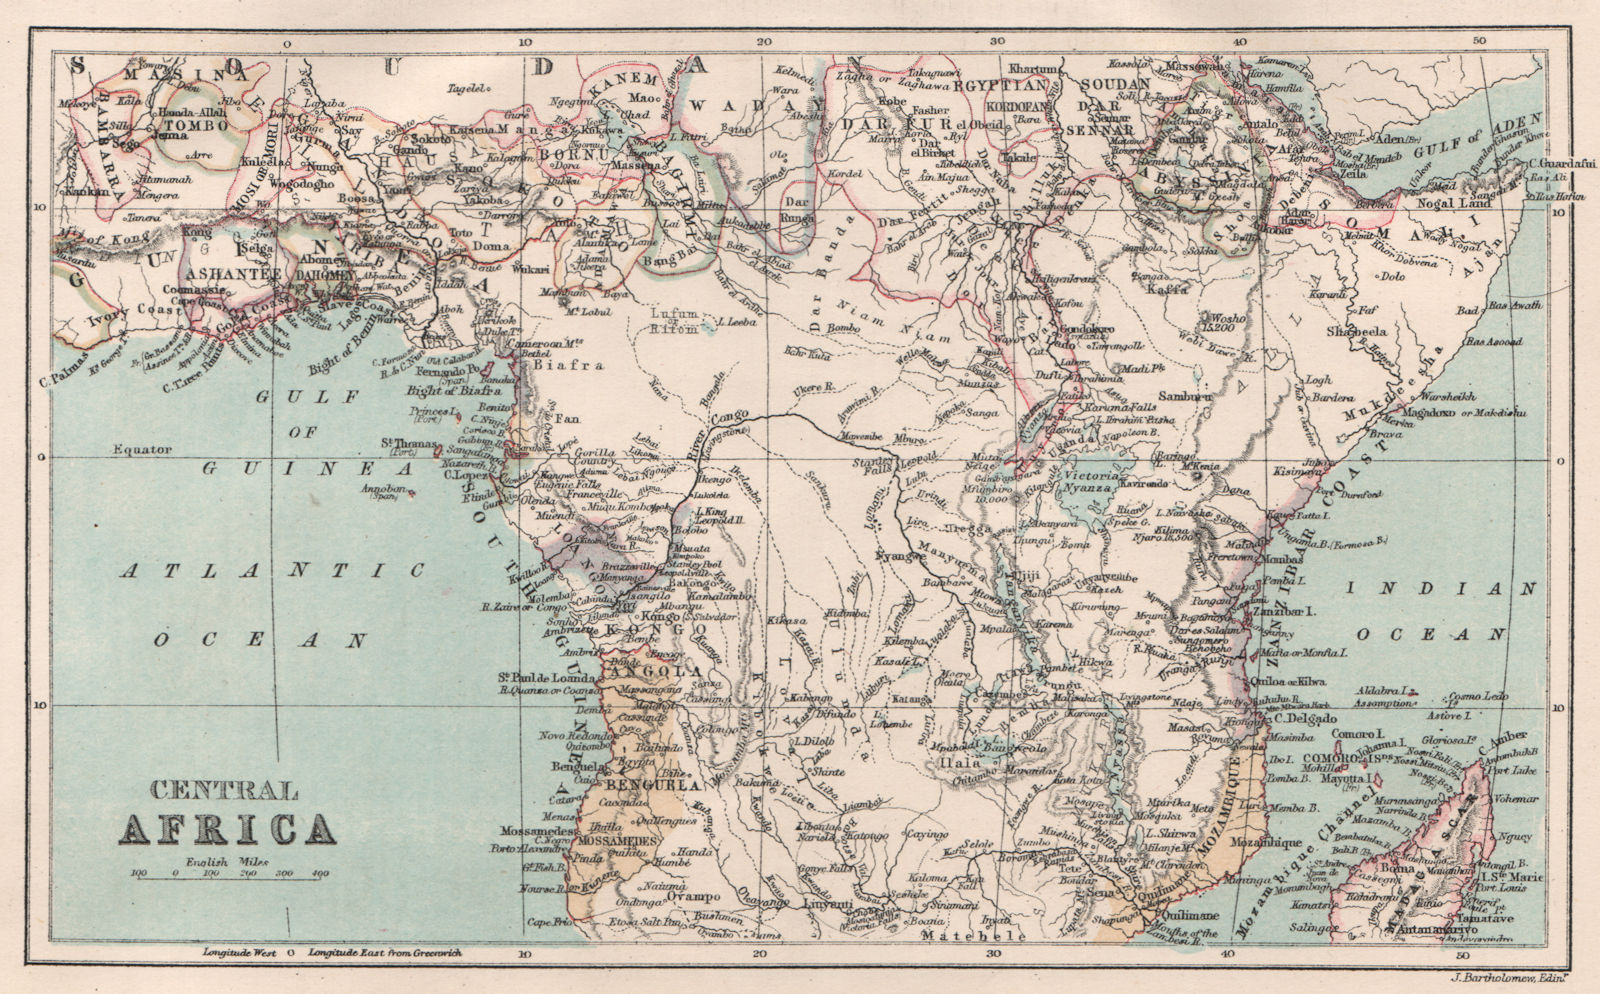 Associate Product Central Africa. Congo Zambia Tanzania Kenya Mozambique. BARTHOLOMEW 1886 map